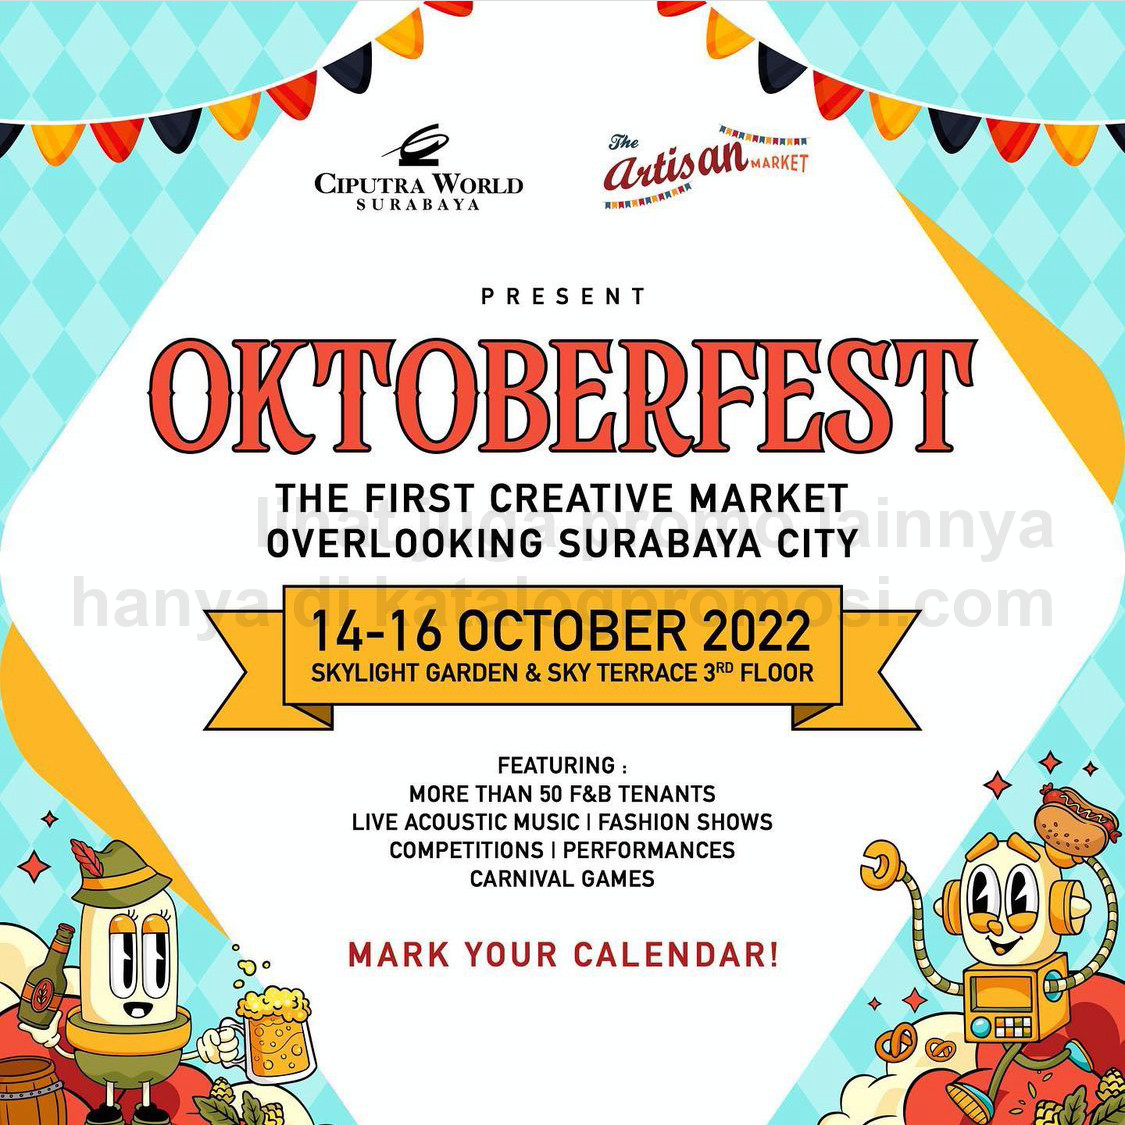 Ciputra World Surabaya and Artisan Market present OKTOBERFEST 